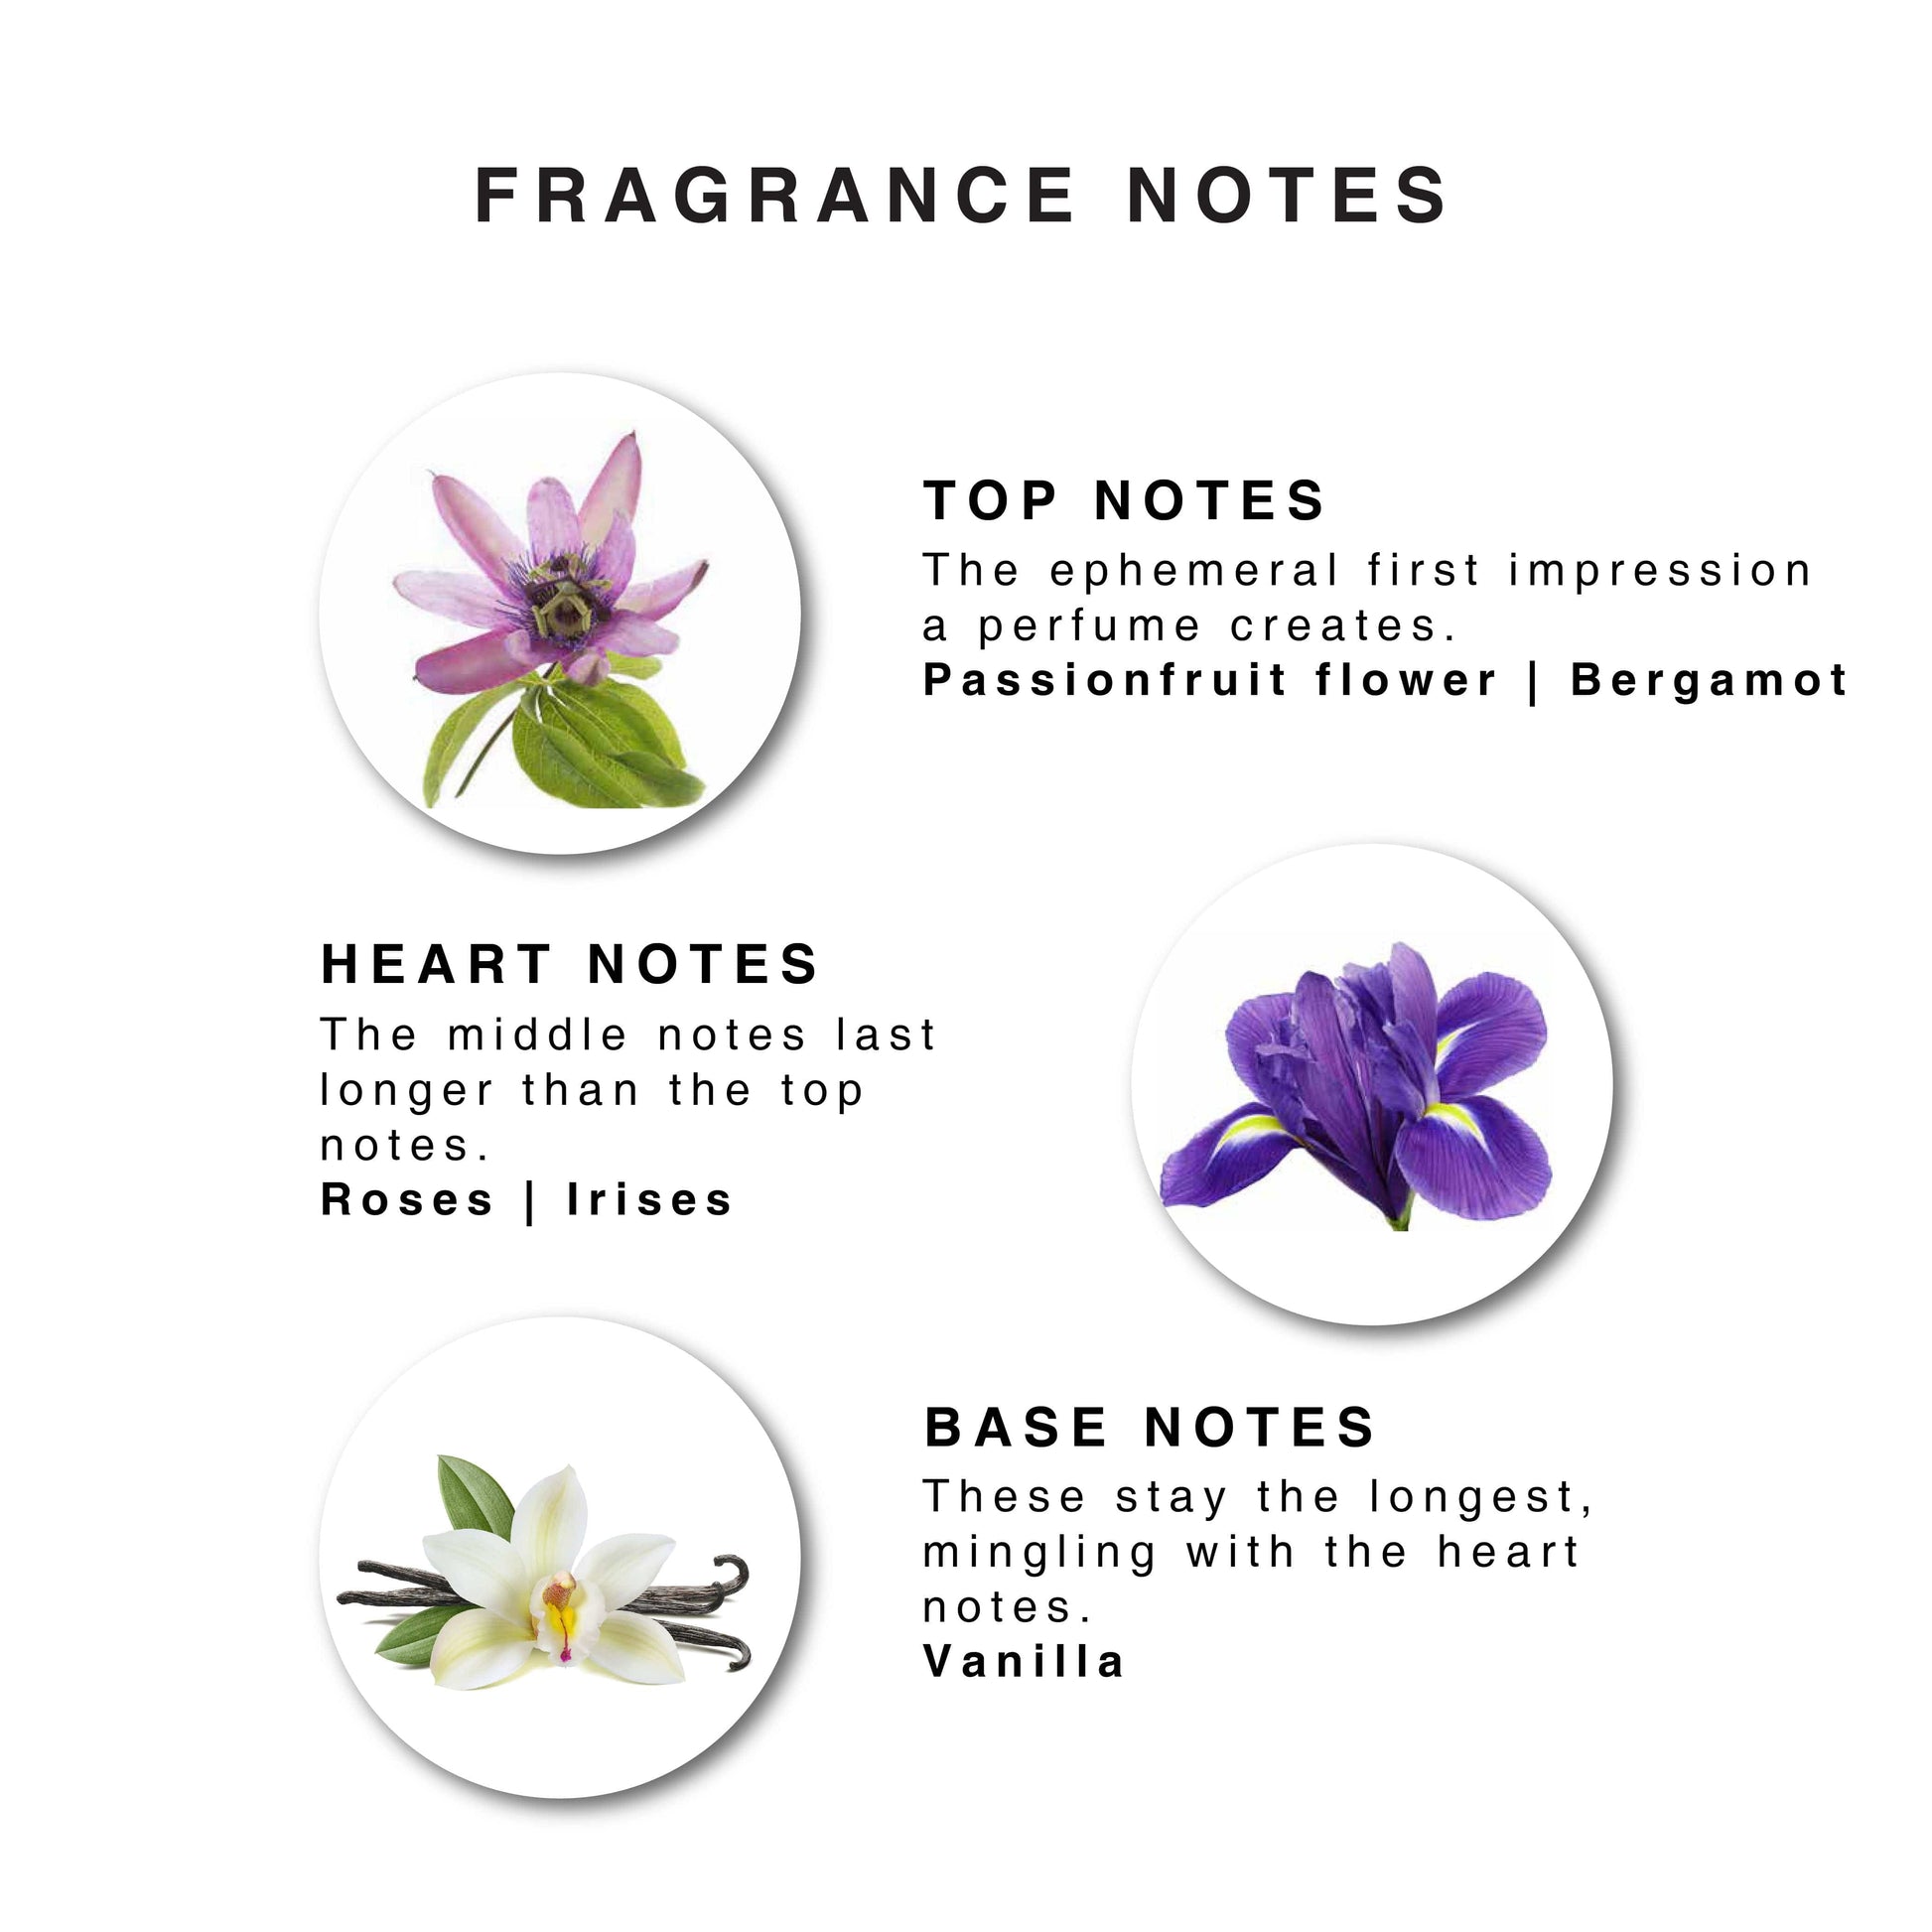 Enchanteur Alluring Pocket Perfume, (Pack of 3) By Enchanteur